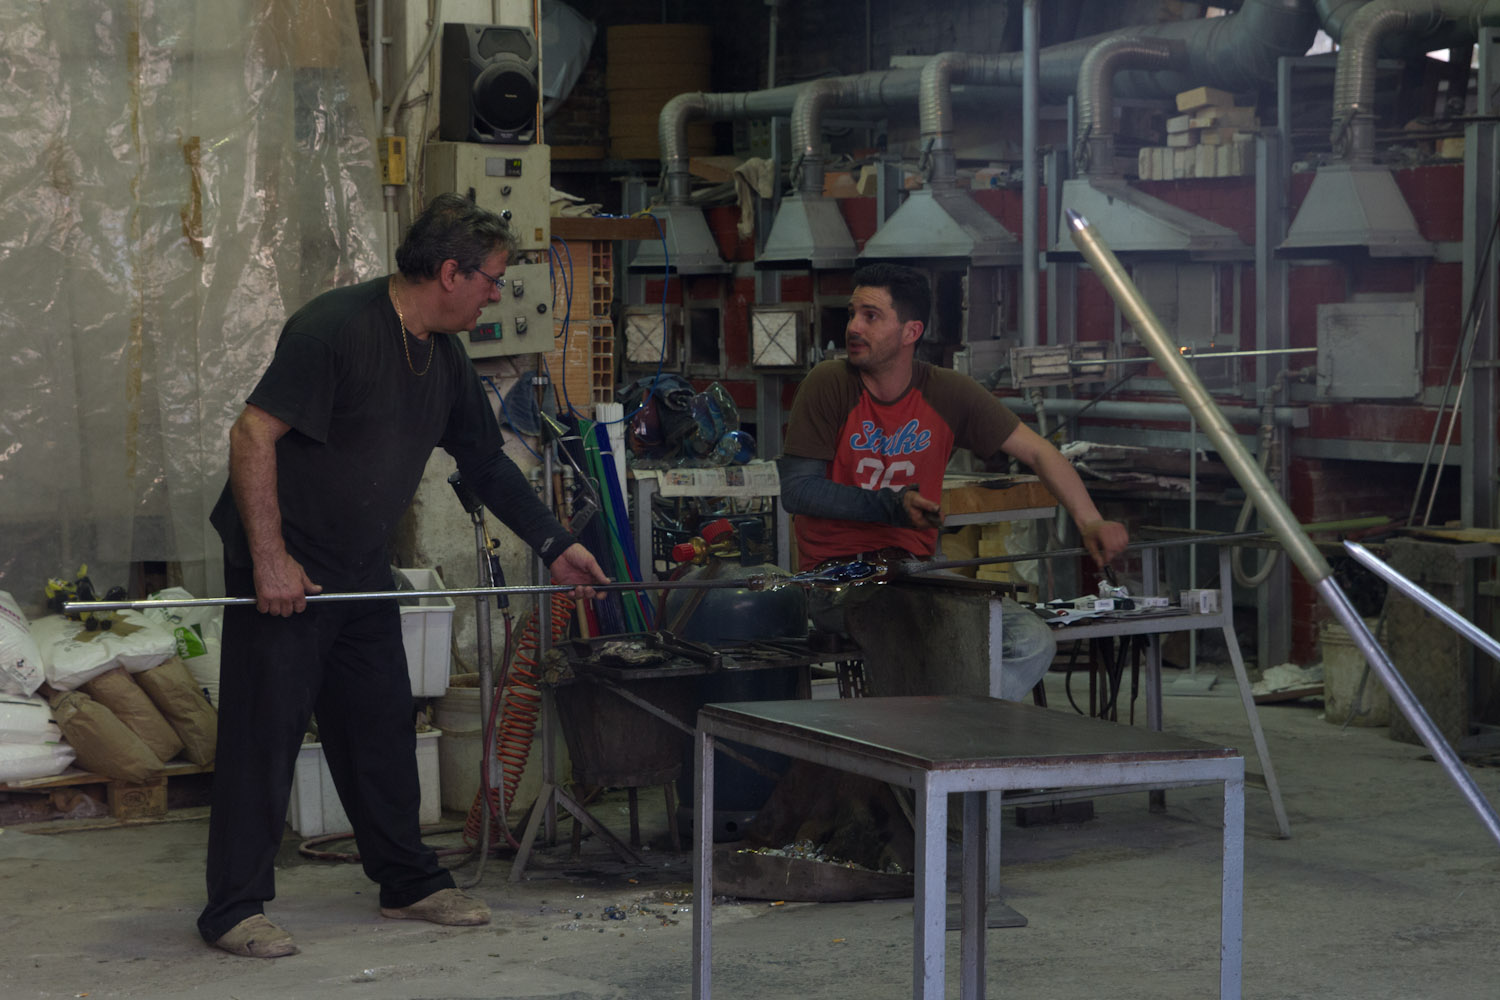 Dos artesanos en plena faena en un taller de cristal de Murano, Italia